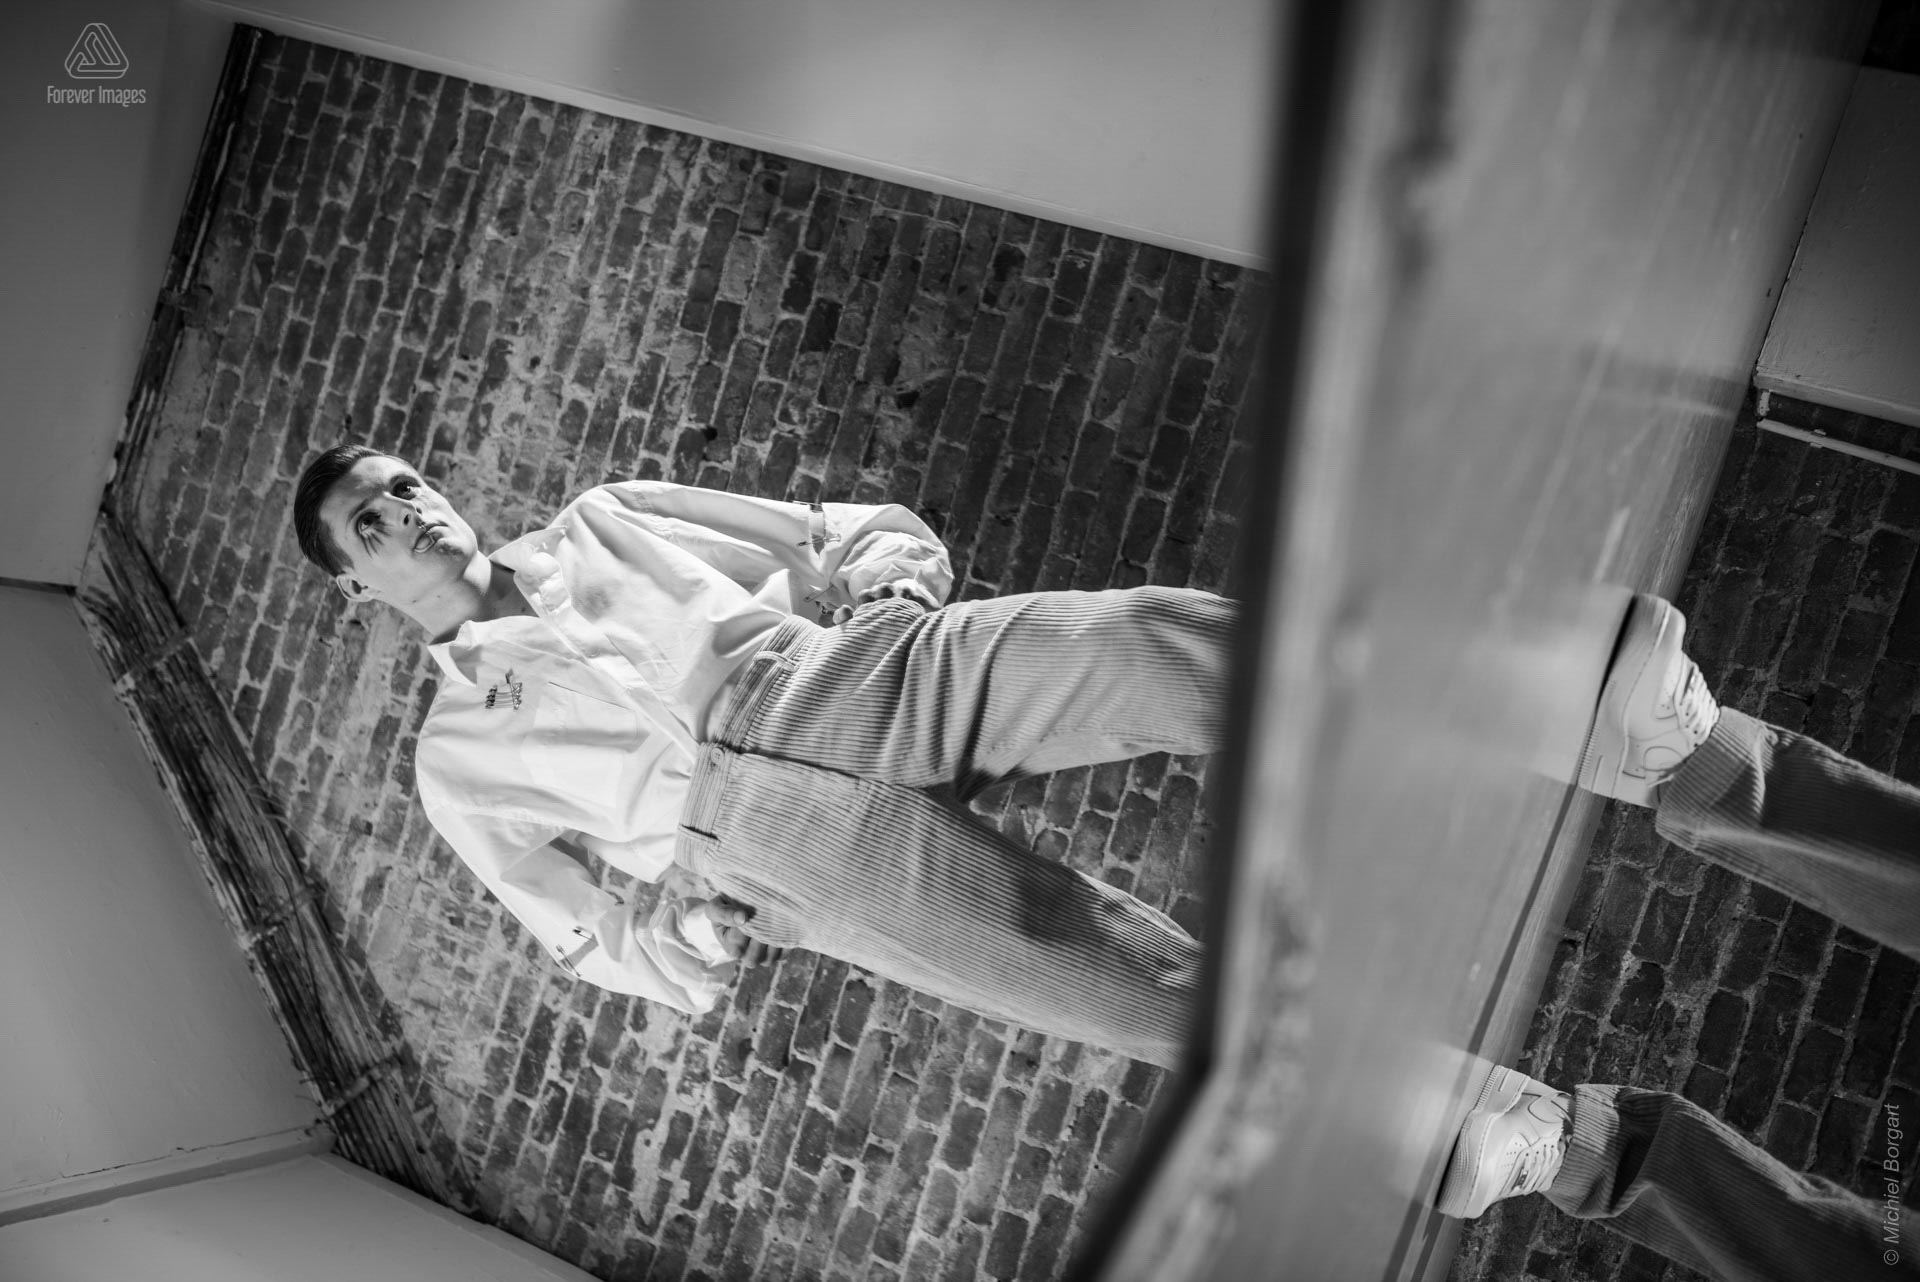 Portretfoto fashion zwart-wit in spiegel staand | Bryan Louter Francis Keesman Emma Heirbaut | Fashionfotograaf Michiel Borgart - Forever Images.